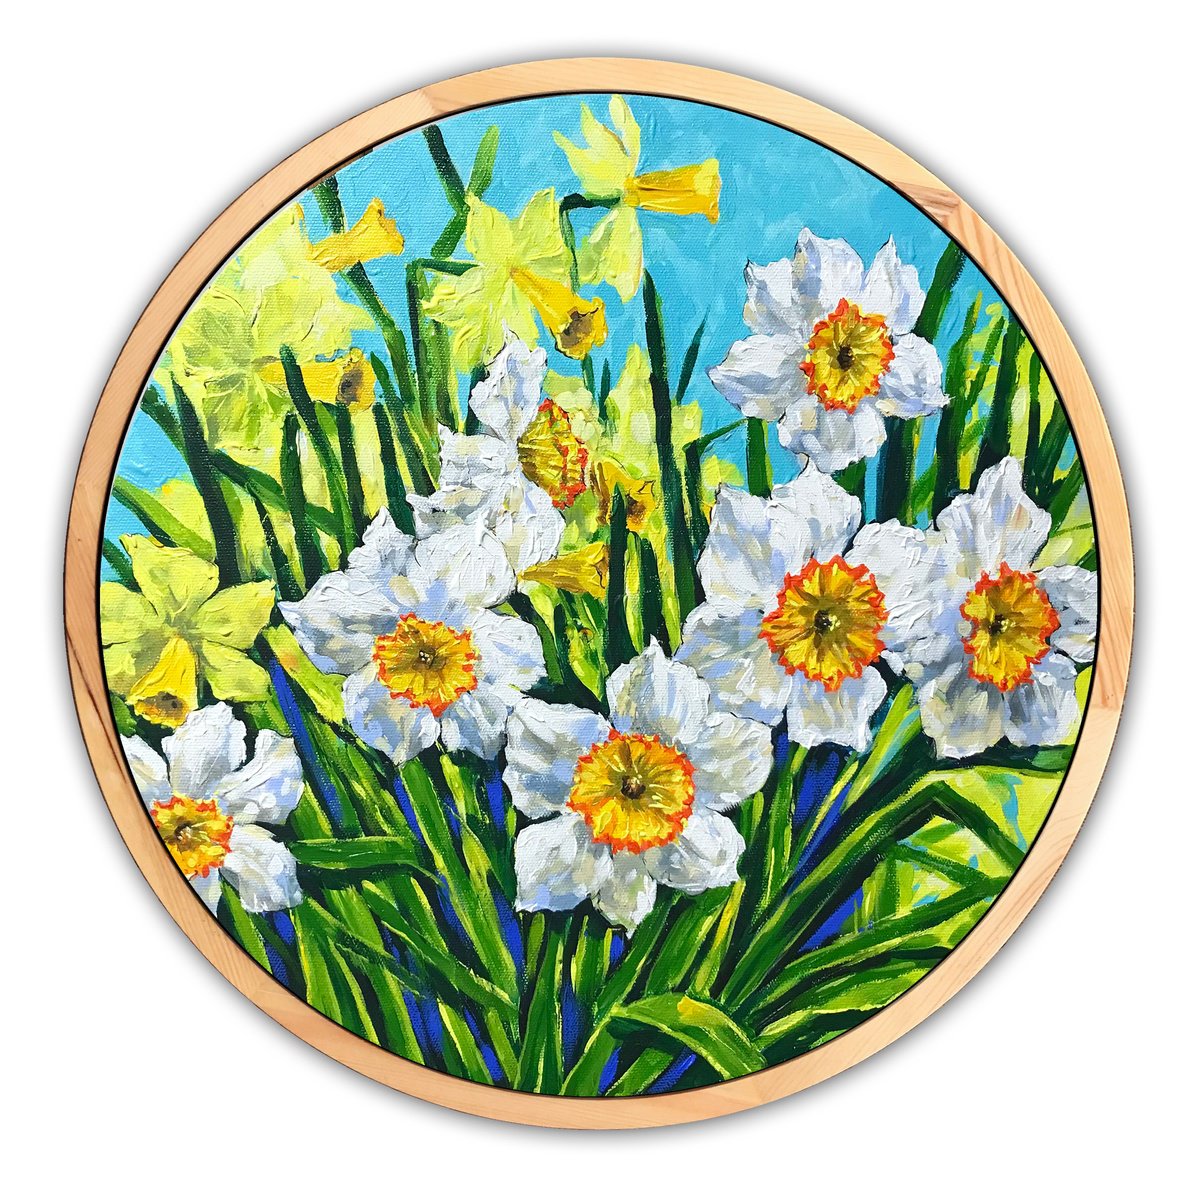 Spring spirit - Daffodils by Irina Redine